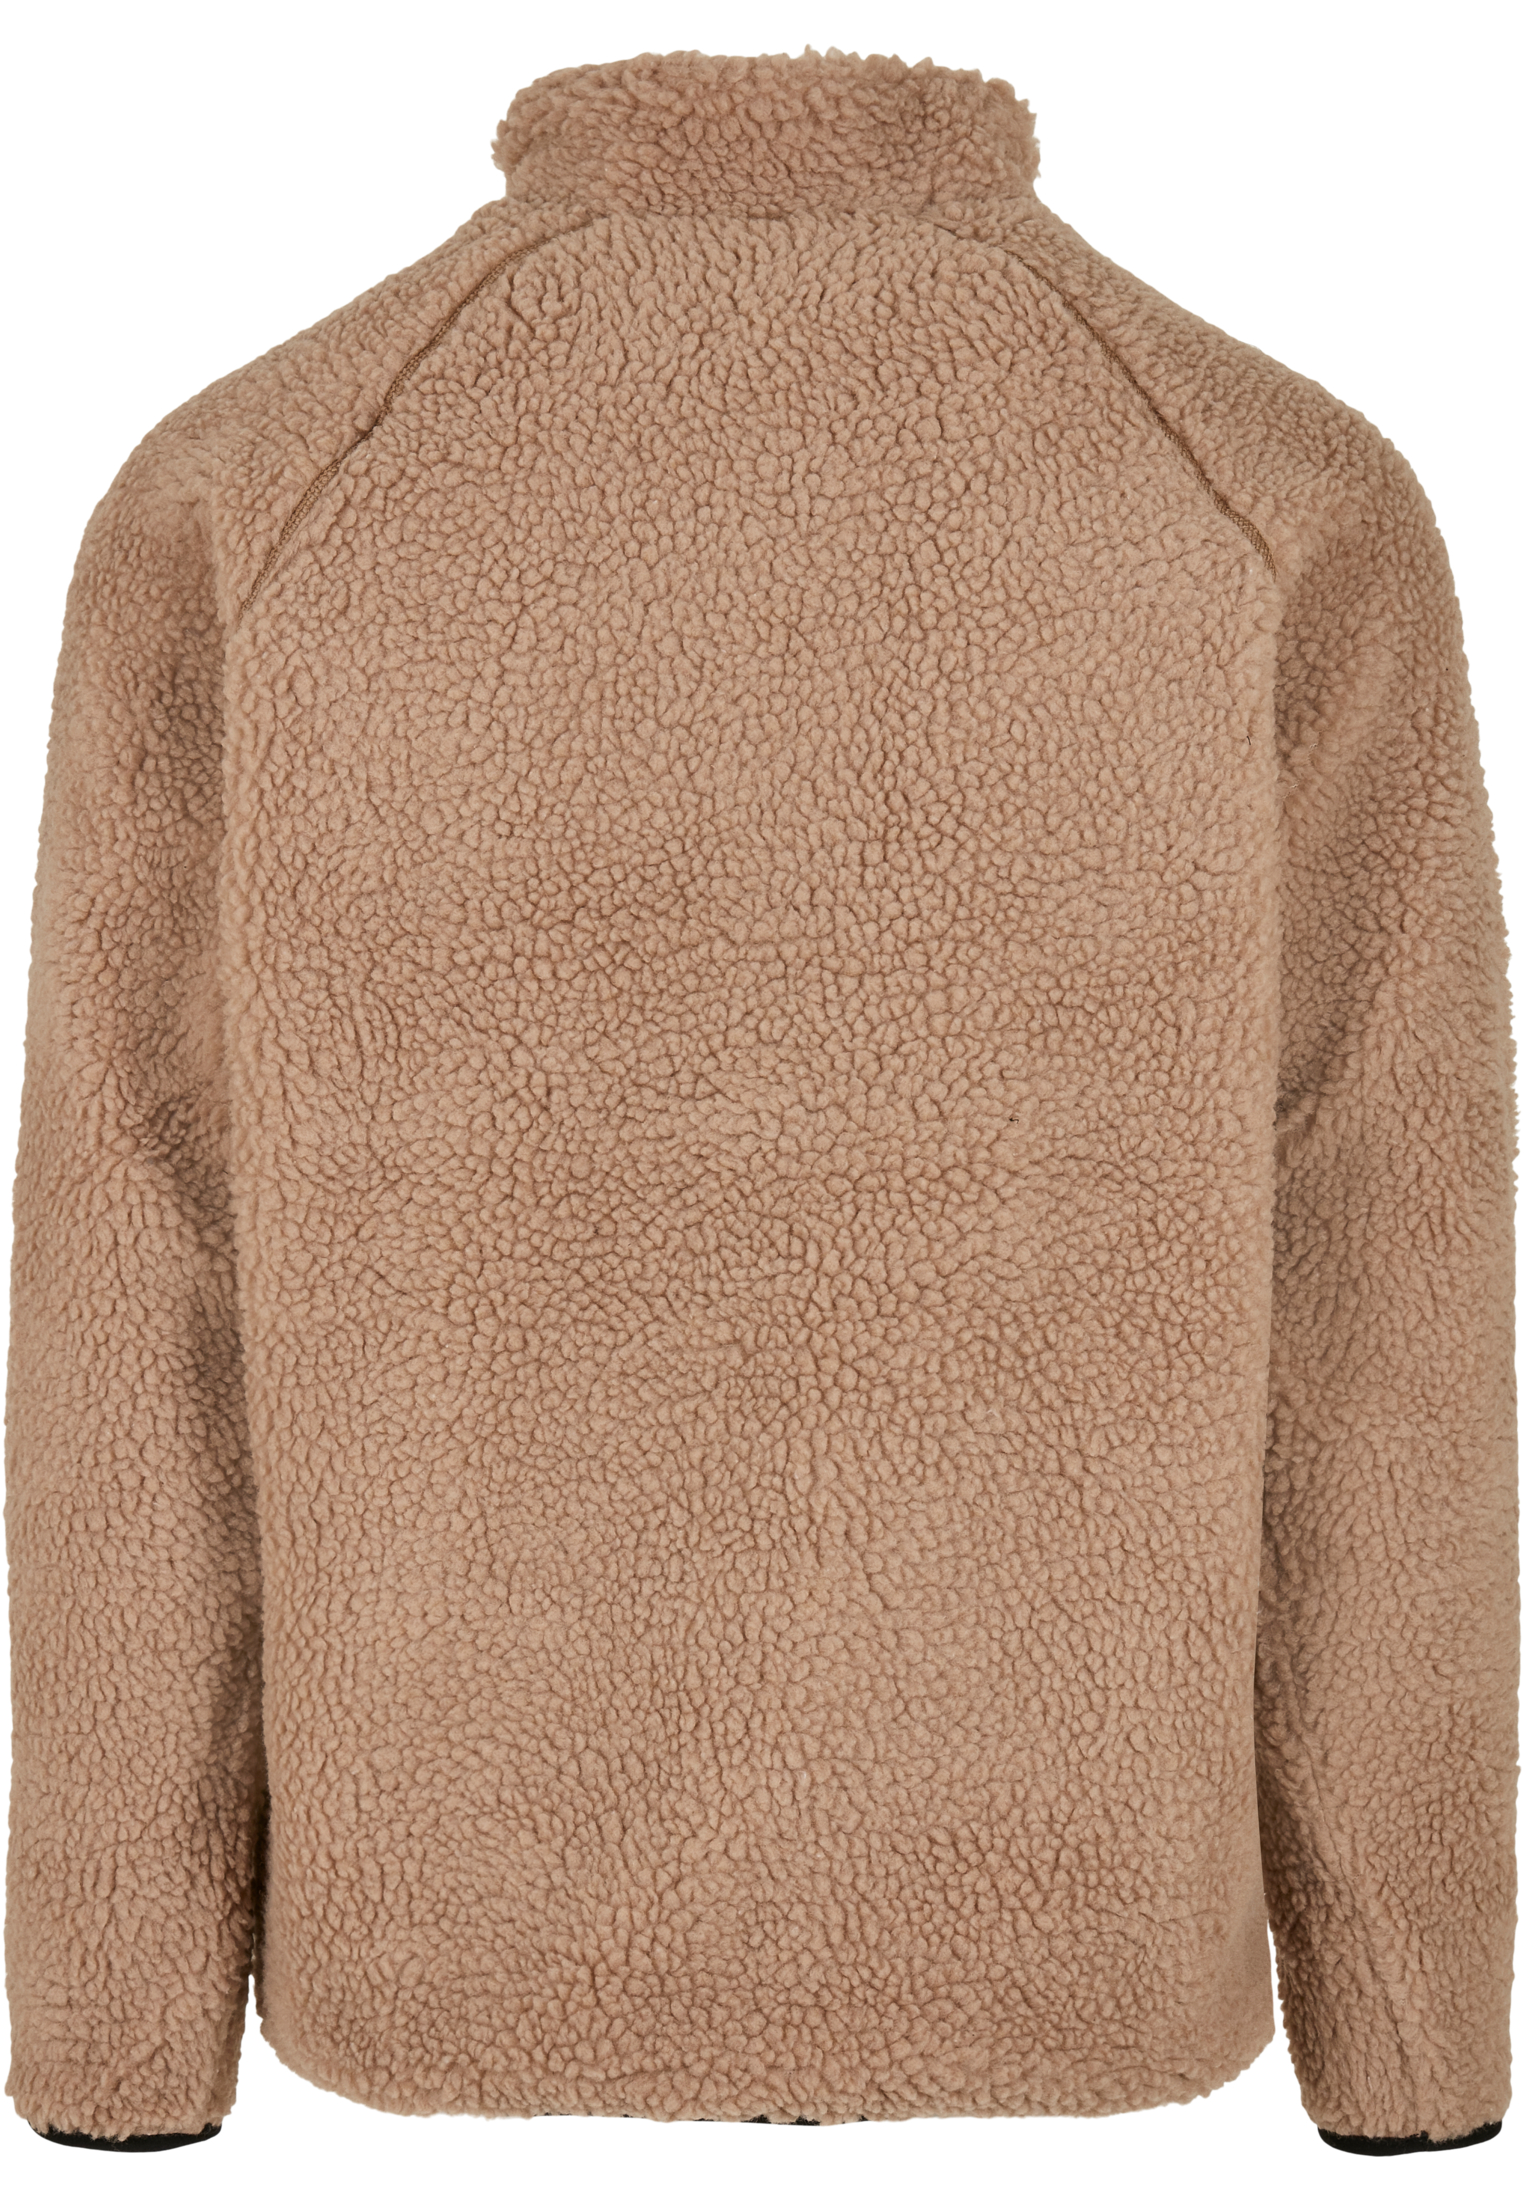 Jacken Teddyfleece Jacket in Farbe camel